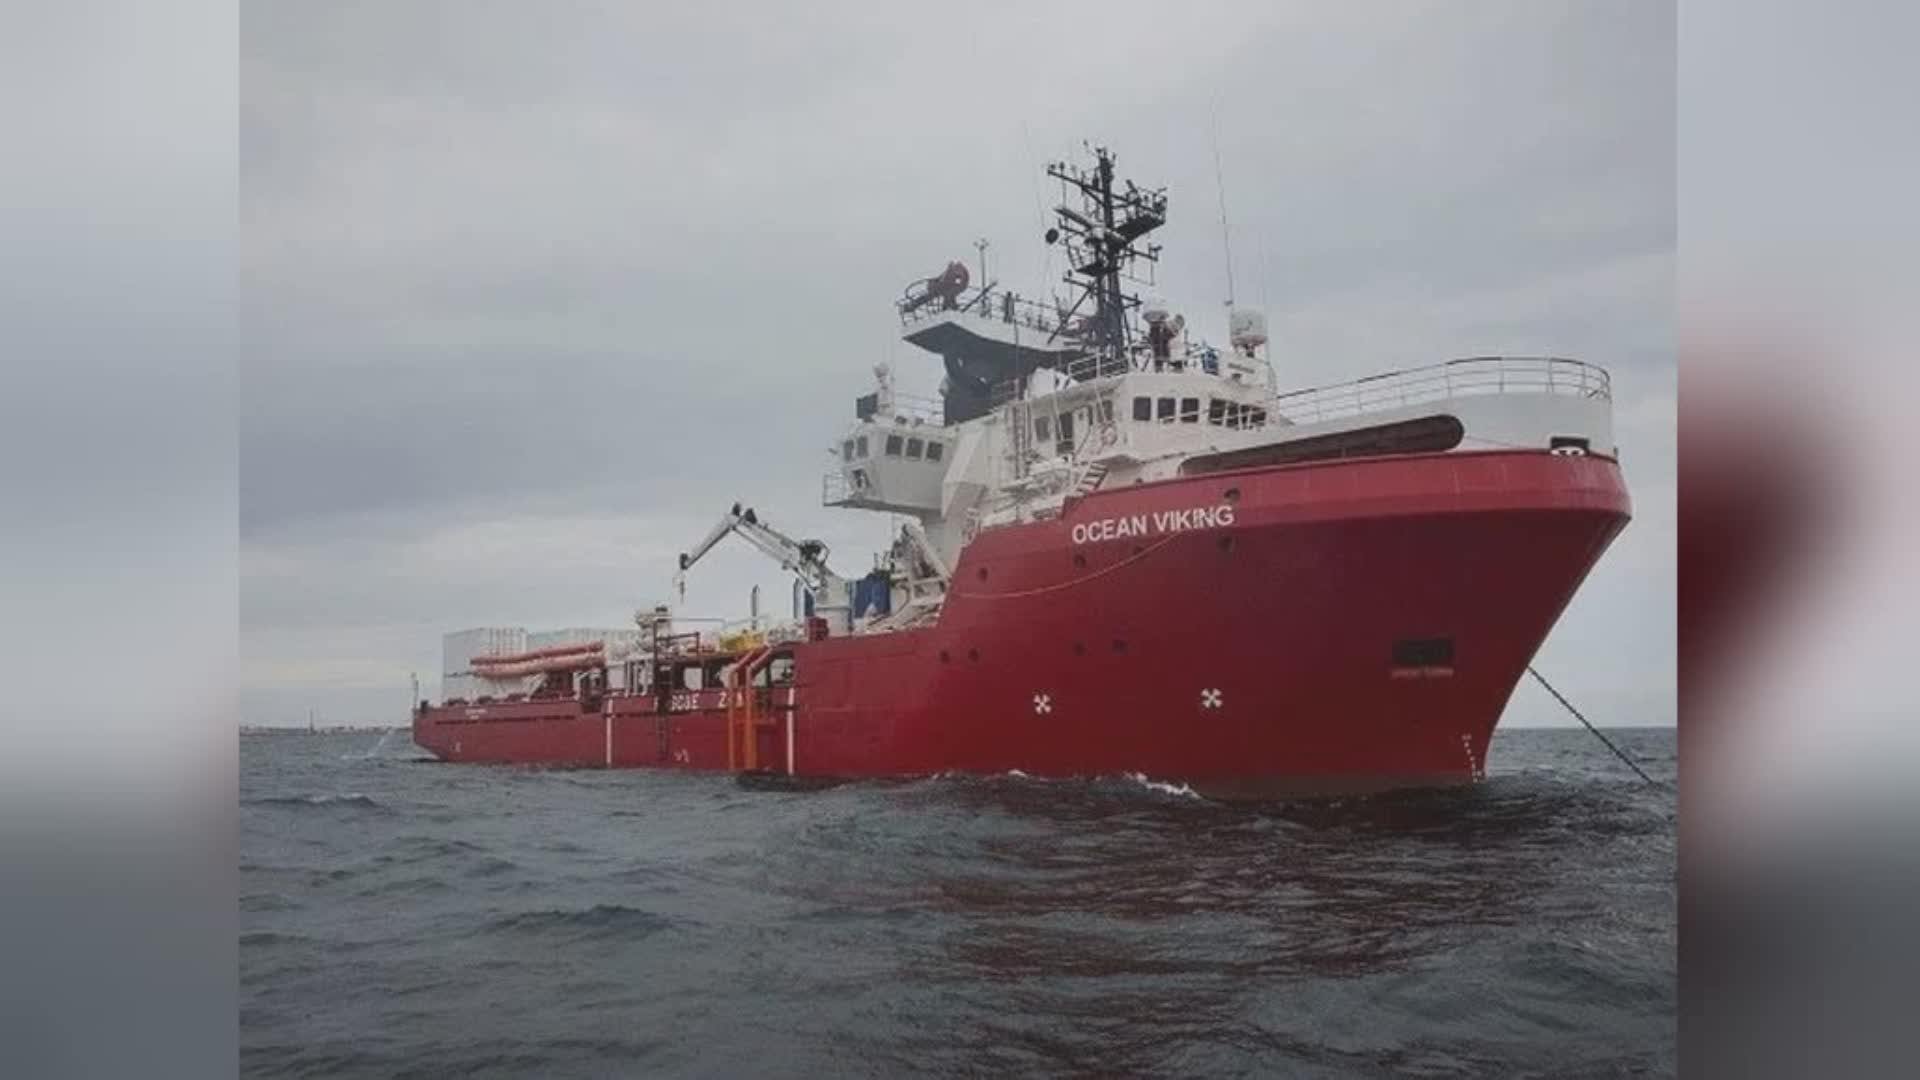 Genova, assegnata al porto ligure la nave Ocean Viking: a bordo 272 migranti